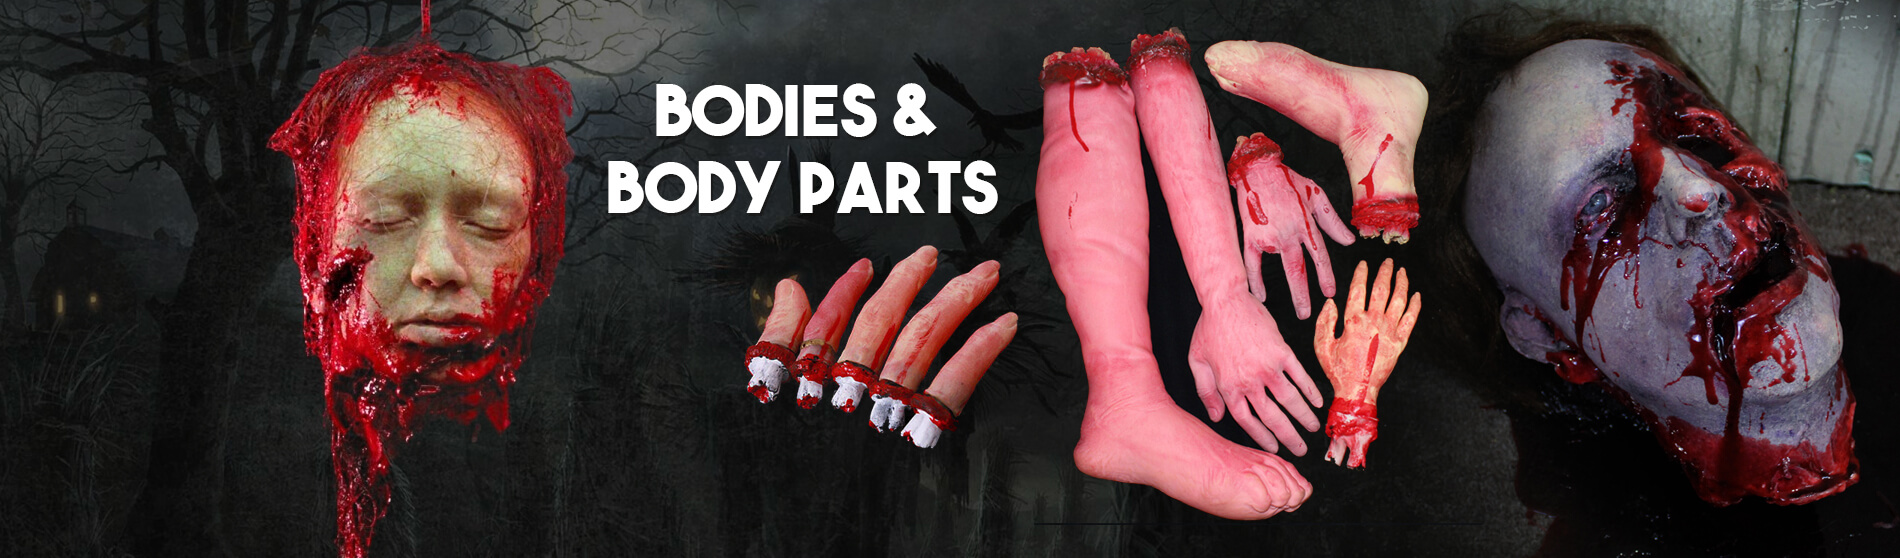 Glendale Halloween : Bodies-Body-Parts